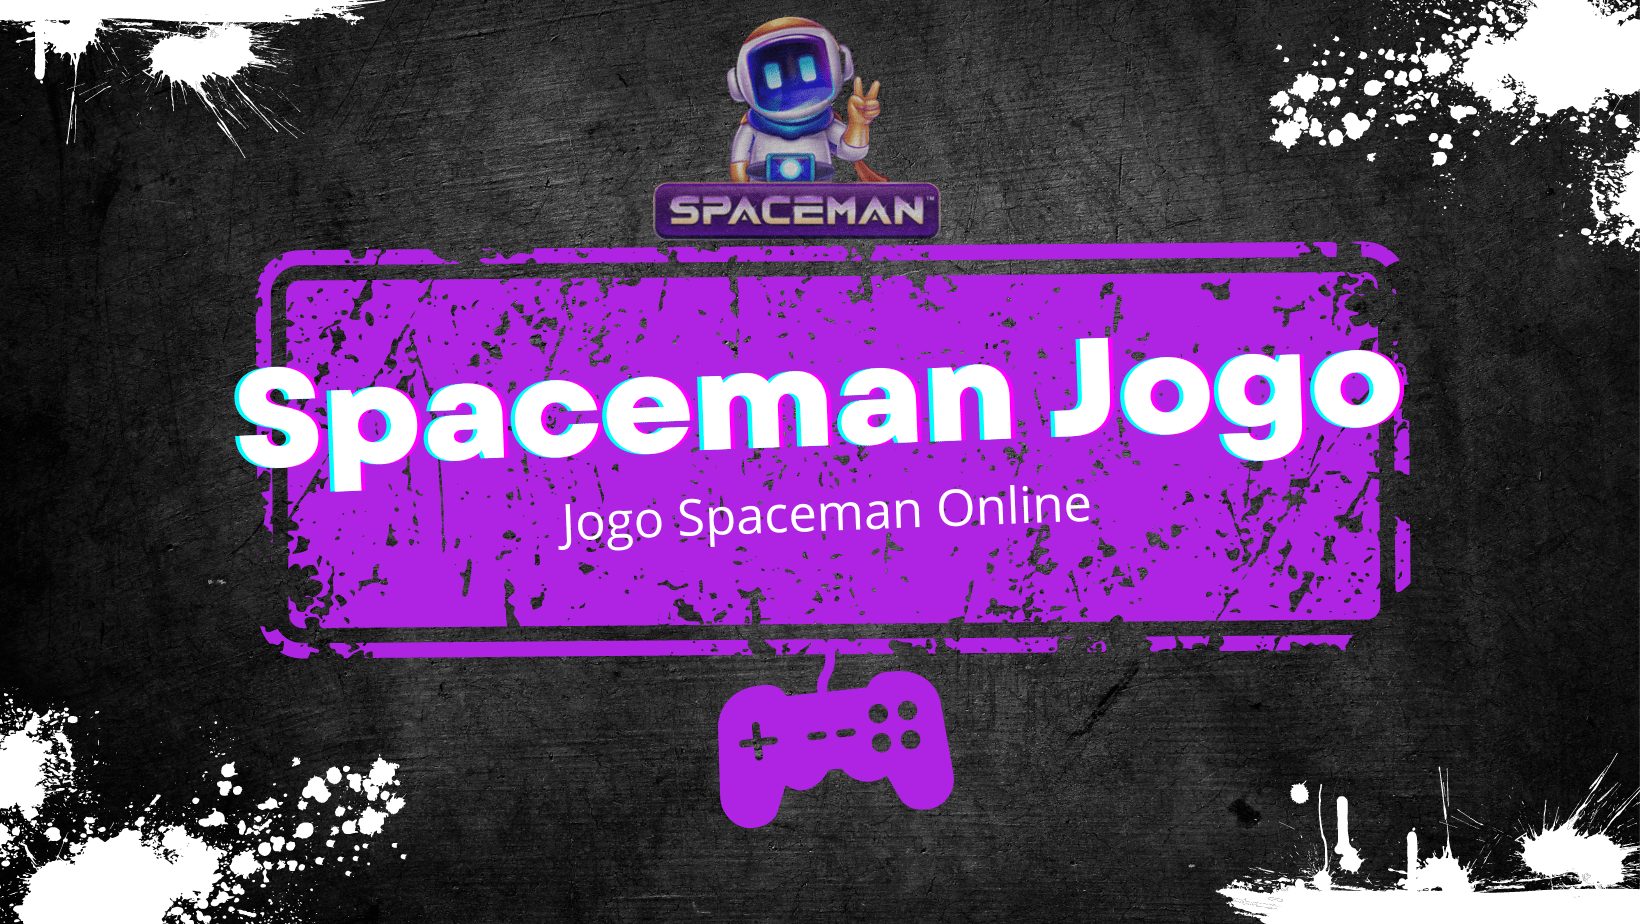 Como ganhar no Spaceman - Estratégia Spaceman